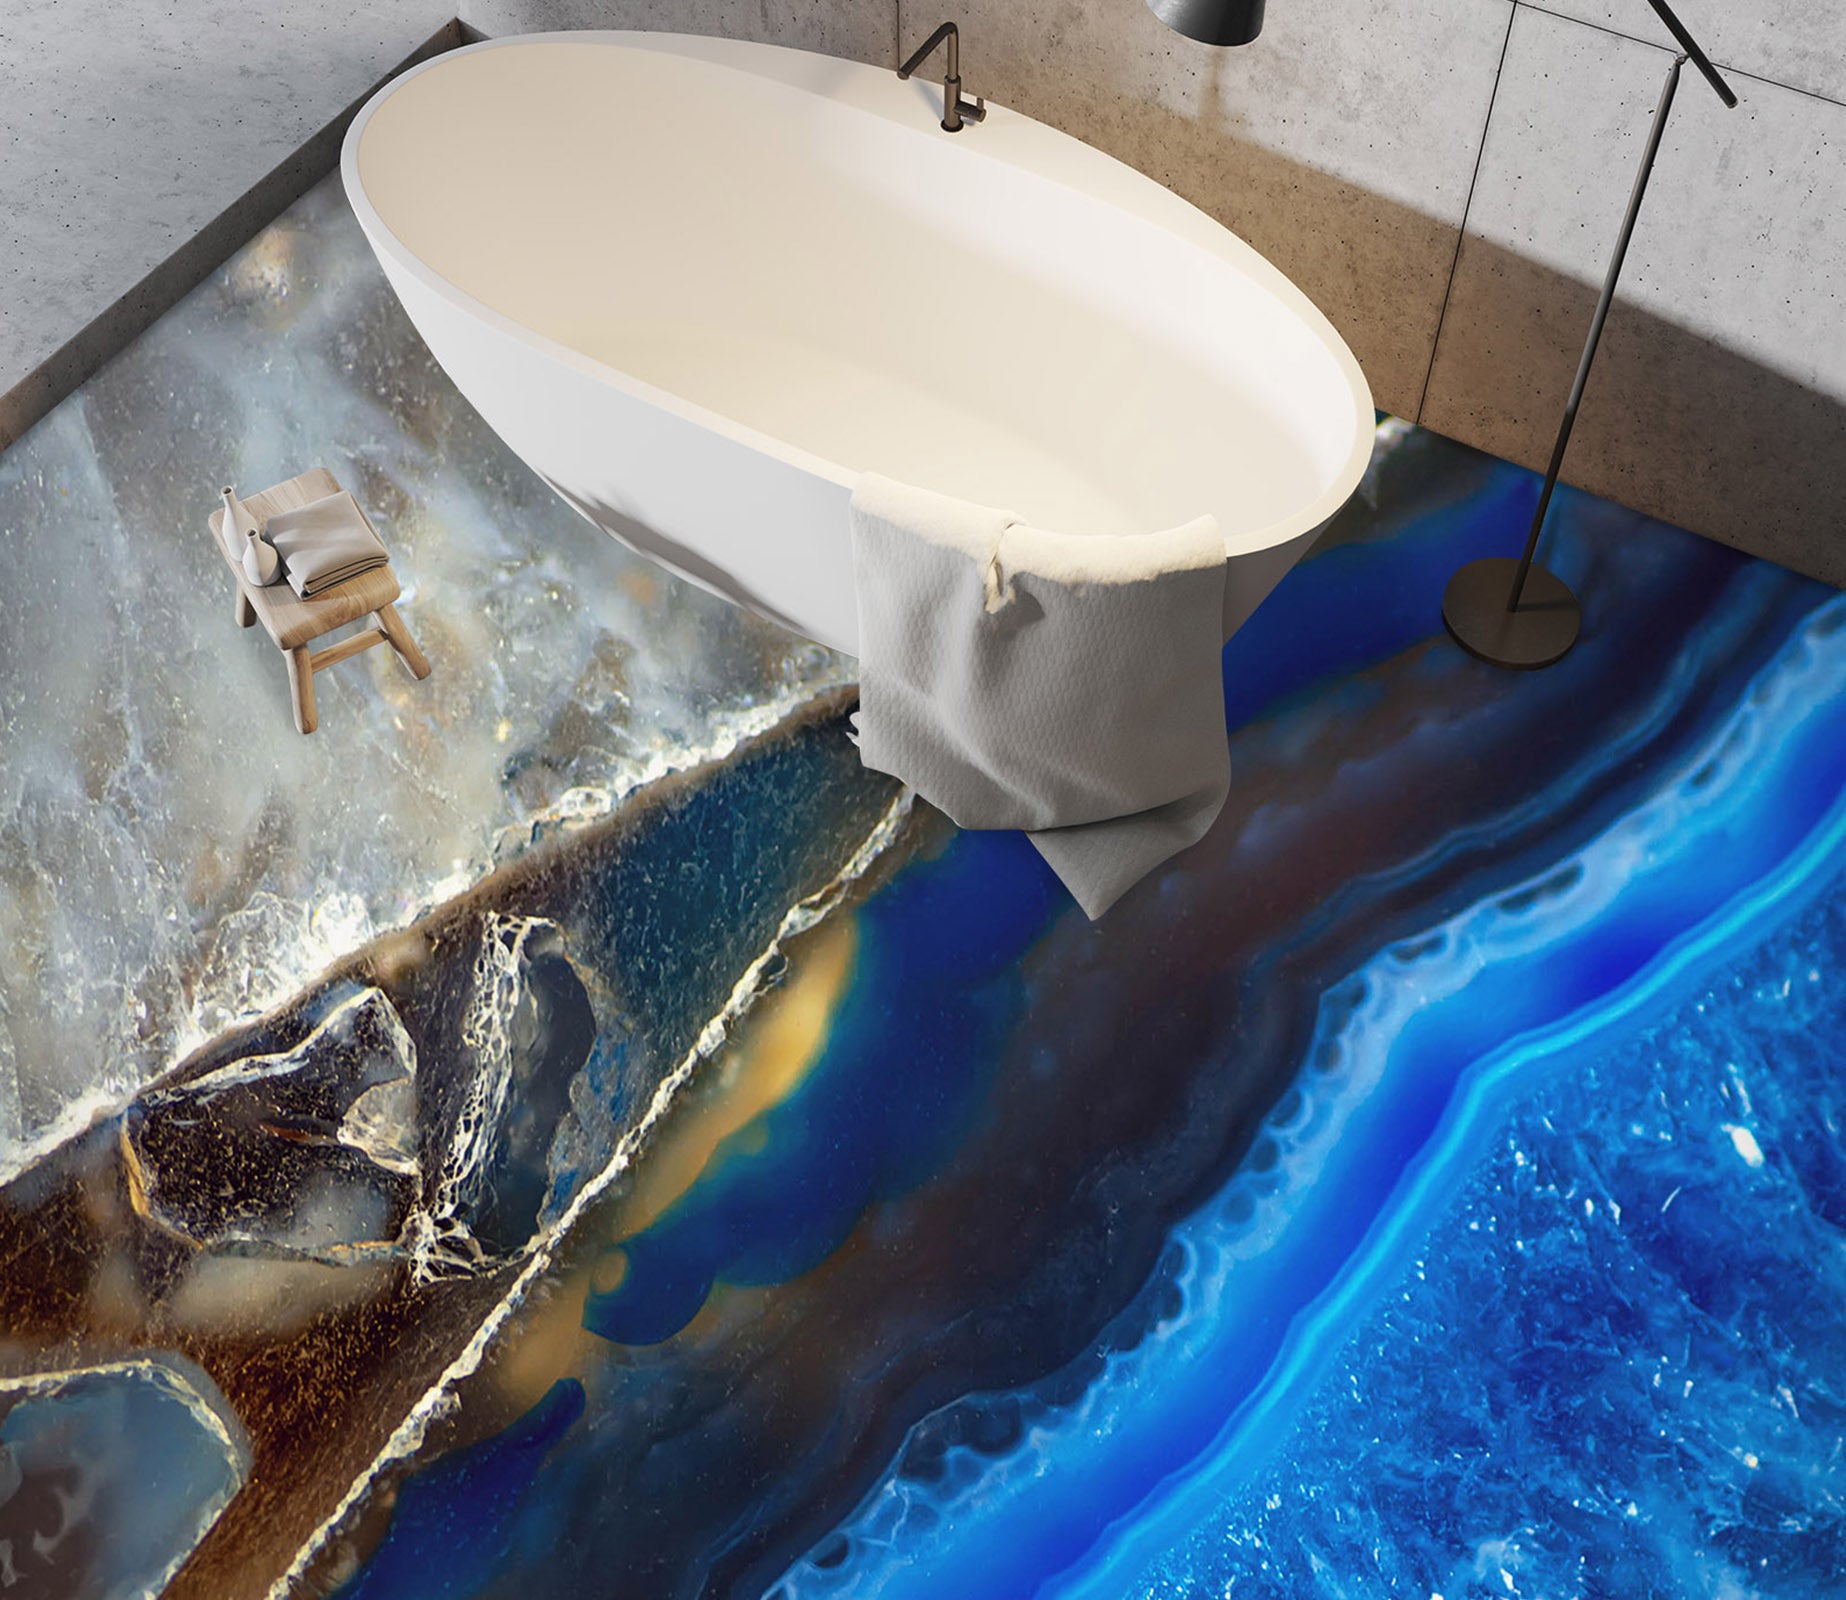 3D Shining Fantasy Blue 1001 Floor Mural  Wallpaper Murals Self-Adhesive Removable Print Epoxy